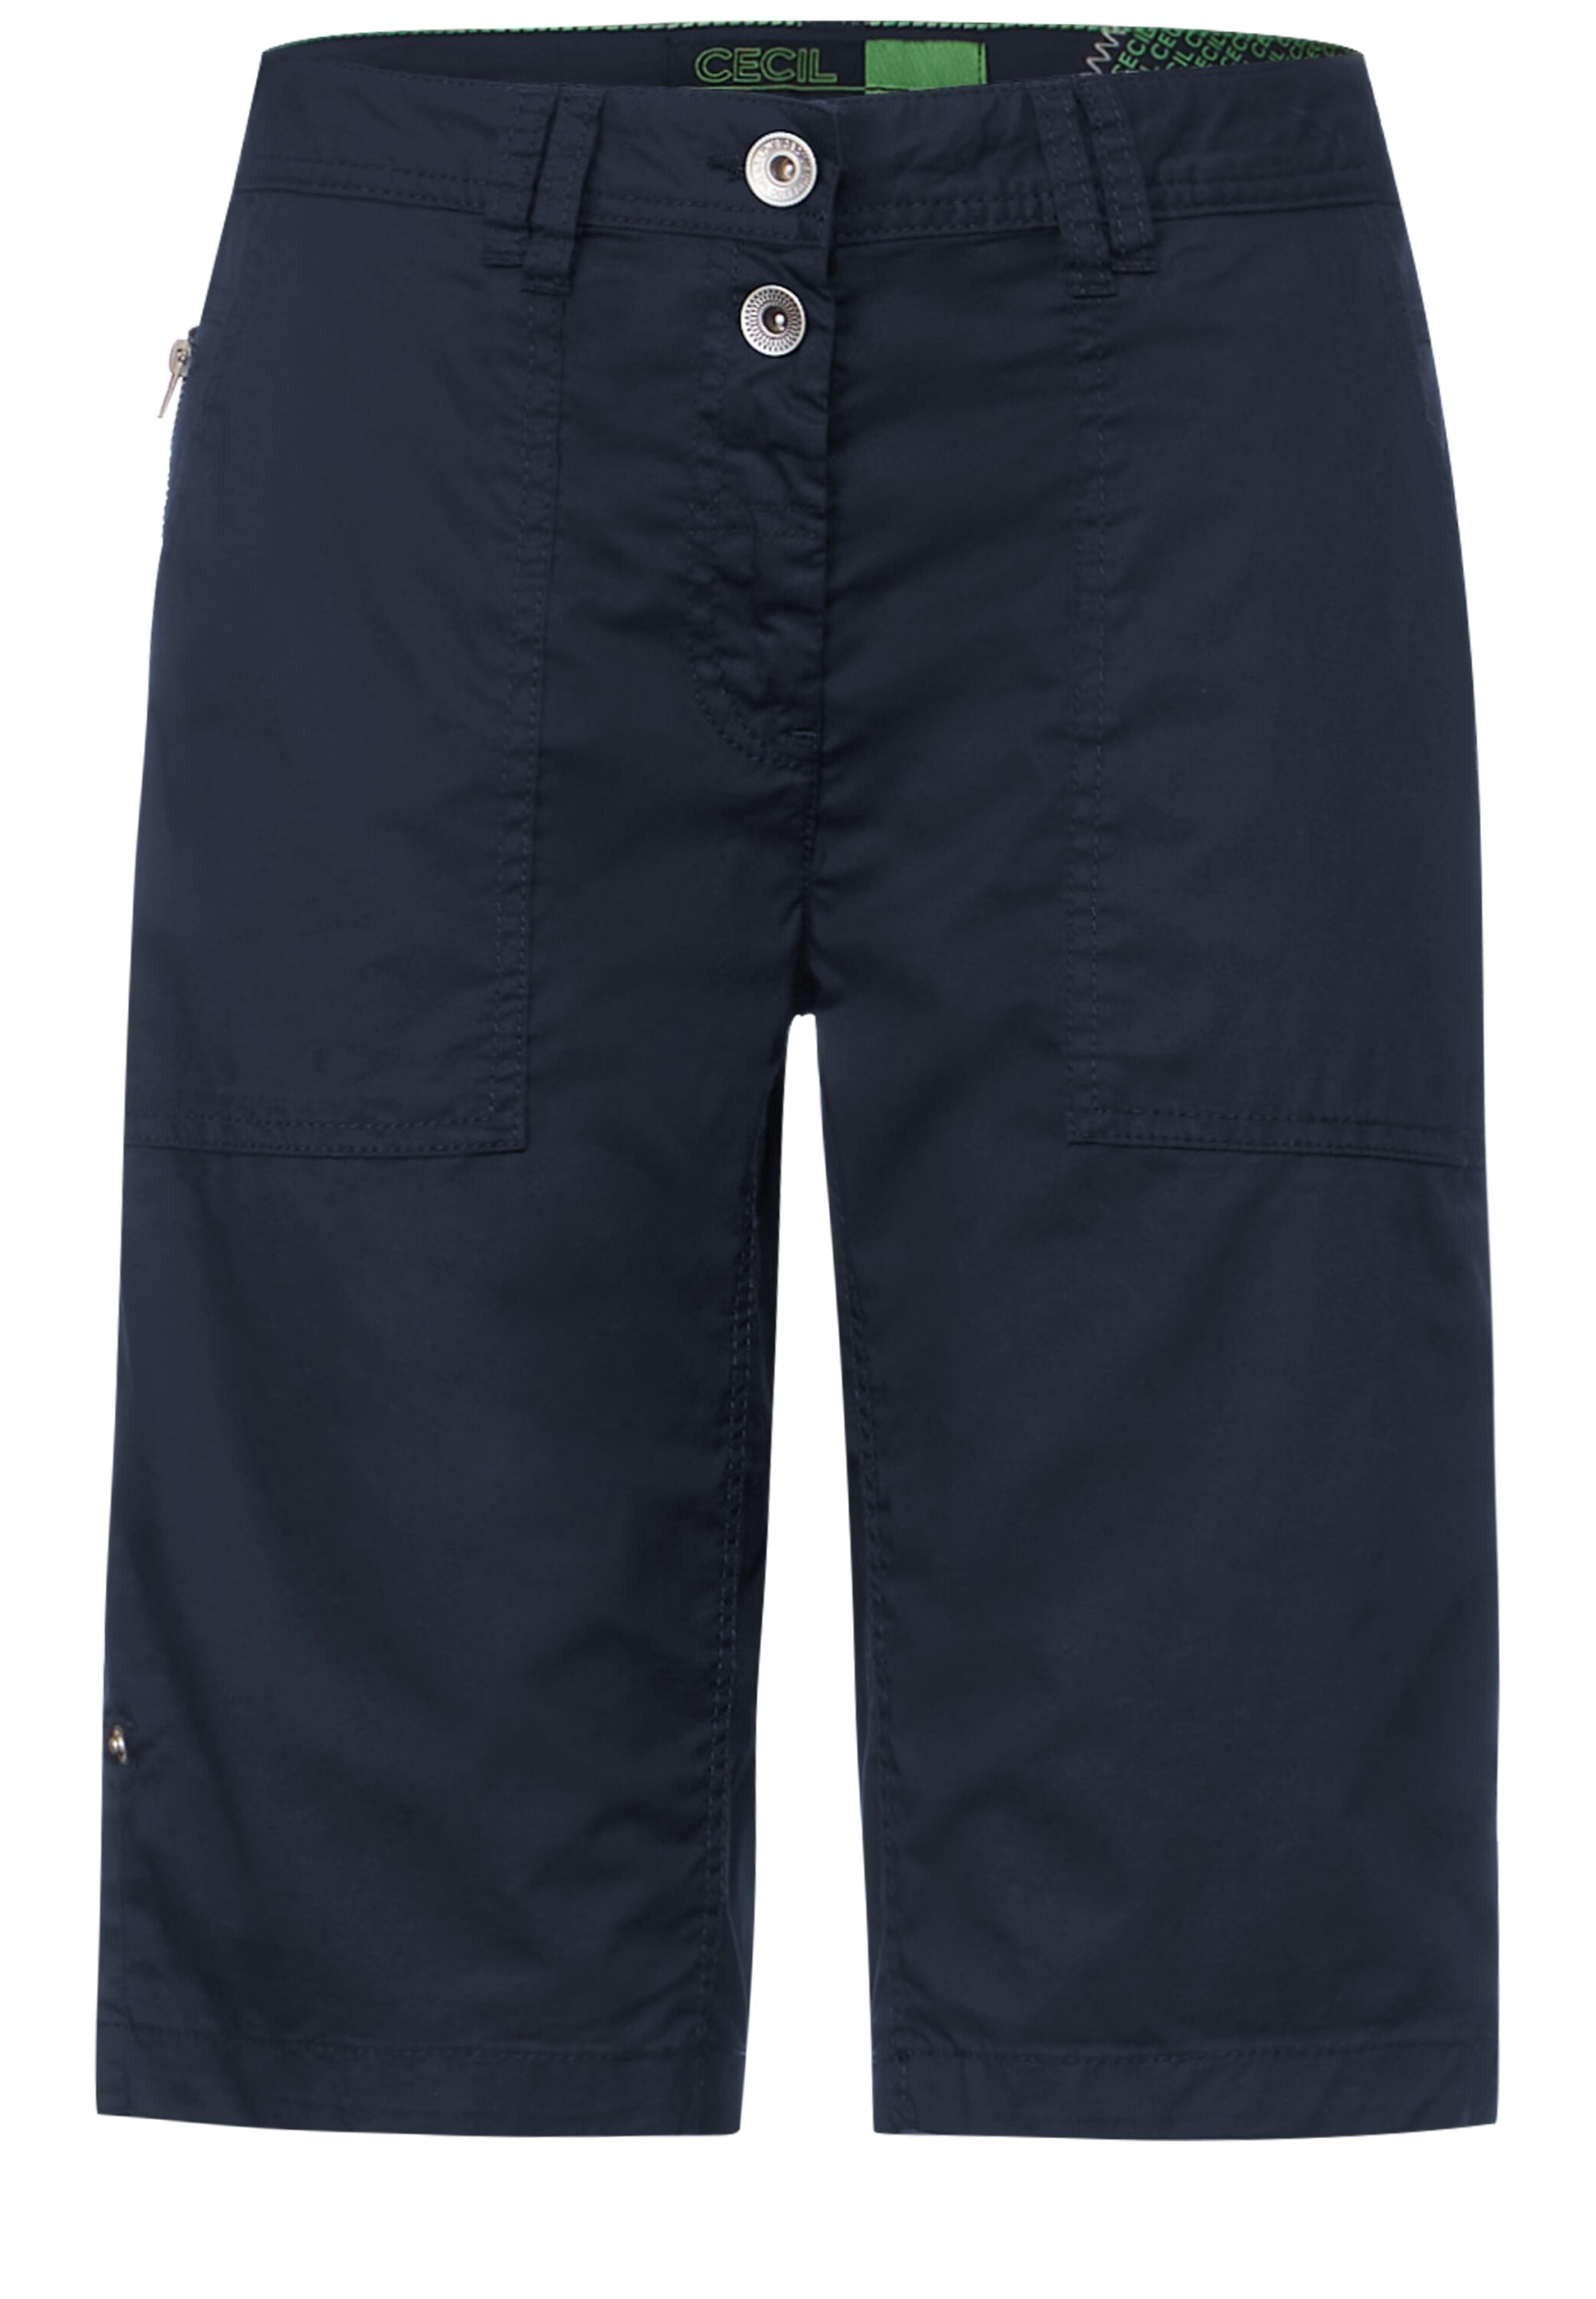 blue NOS Style | | York New B376478-10128-33 Shorts | 33 deep